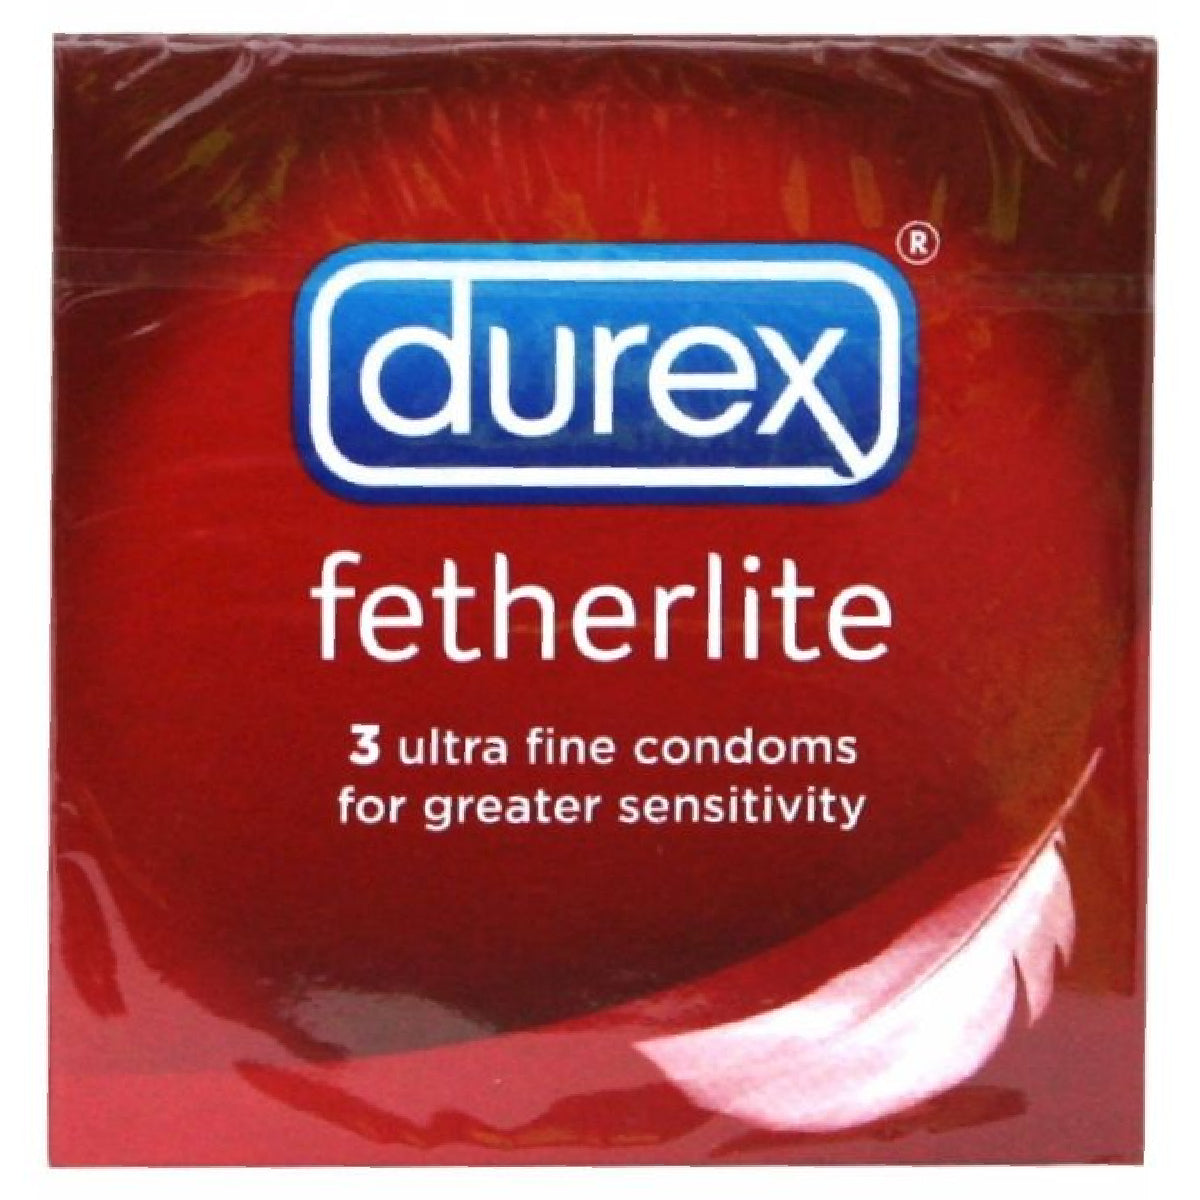 Durex - Fetherlite Ultra Fine Condoms - 3 pcs - Continental Food Store